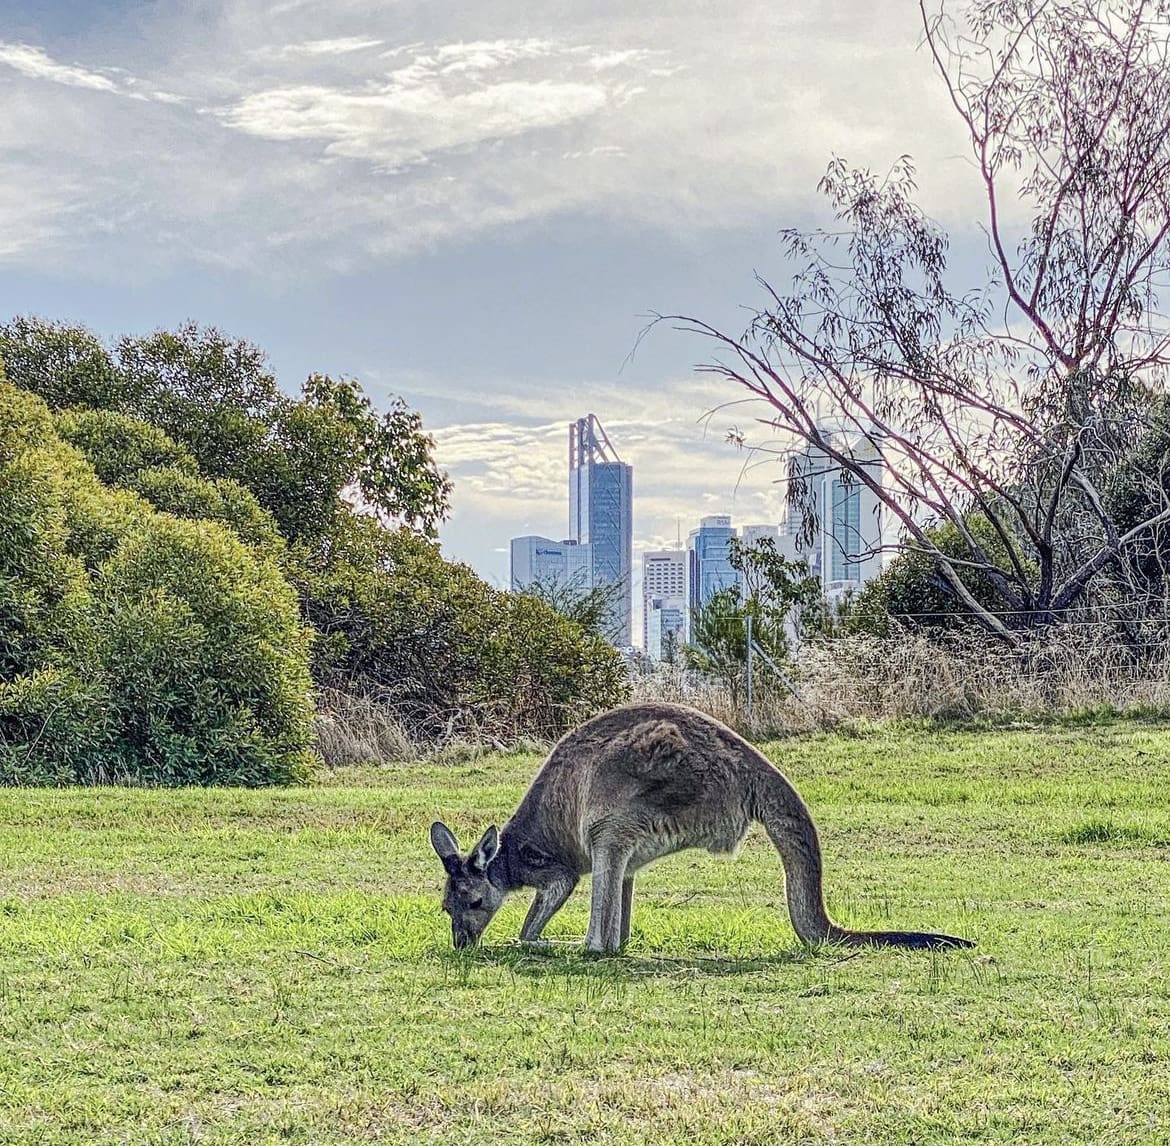 Inner city wildlife in Perth, Australia